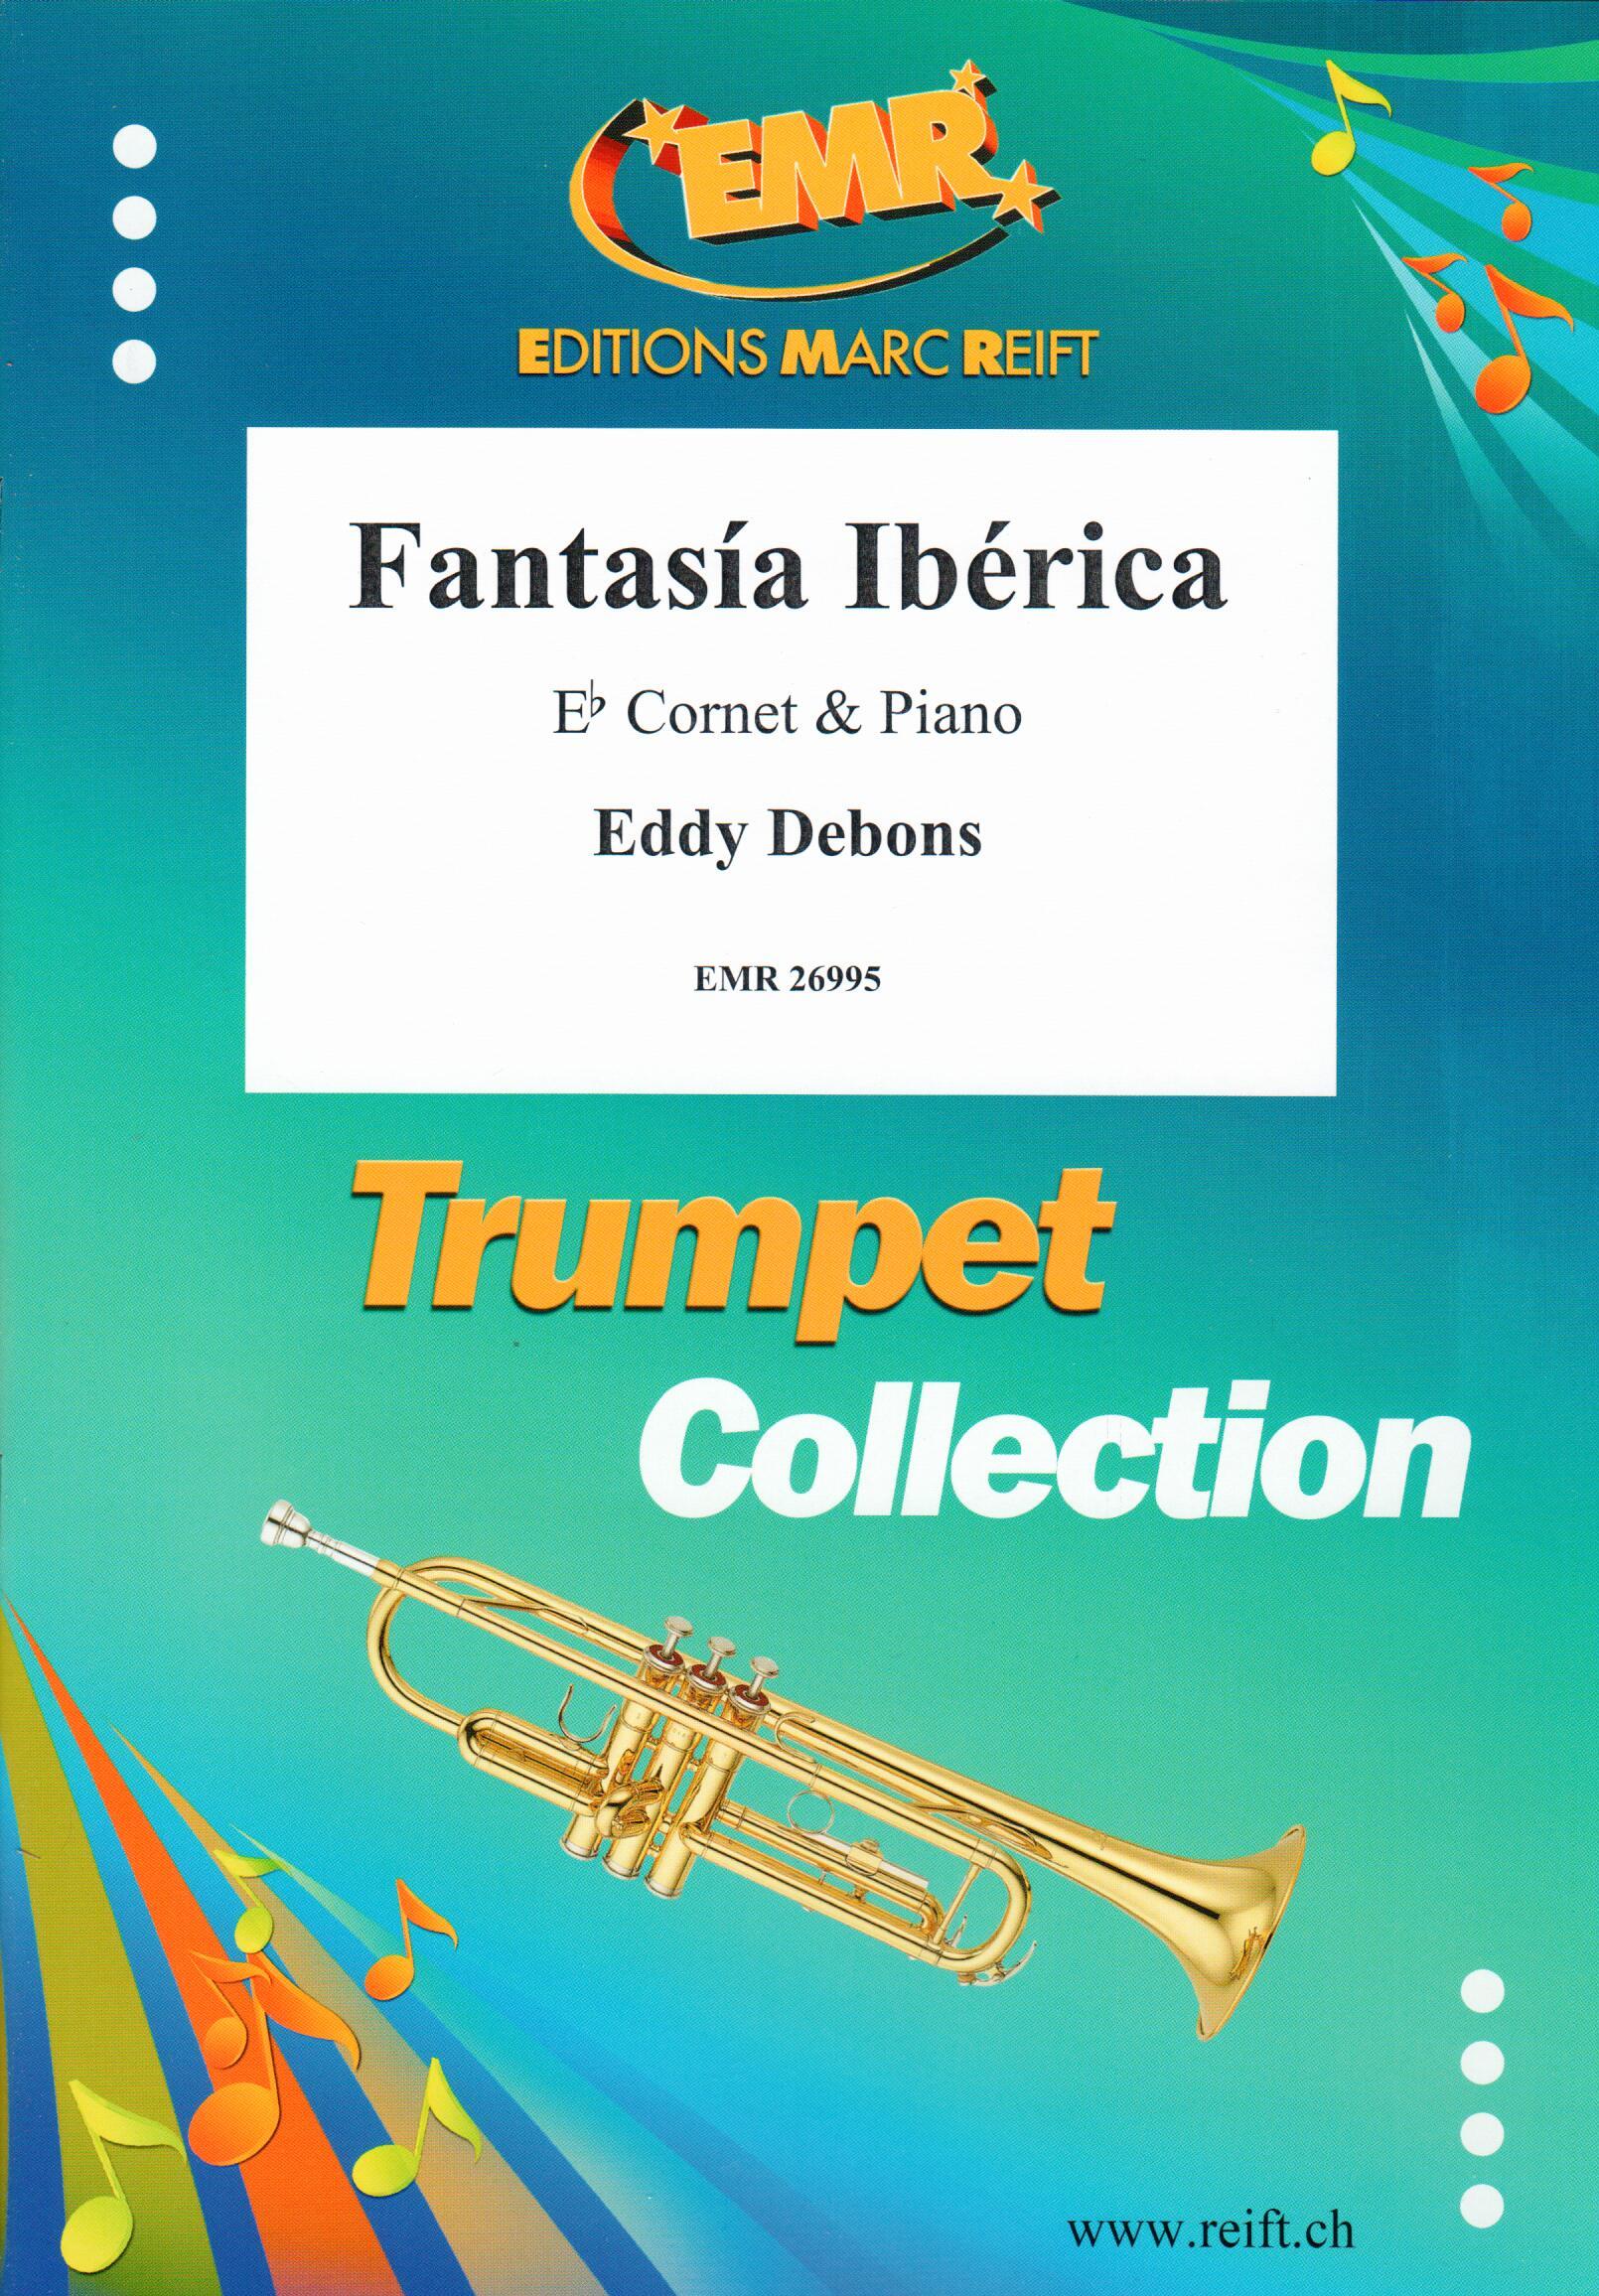 FANTASIA IBéRICA, SOLOS - B♭. Cornet/Trumpet with Piano